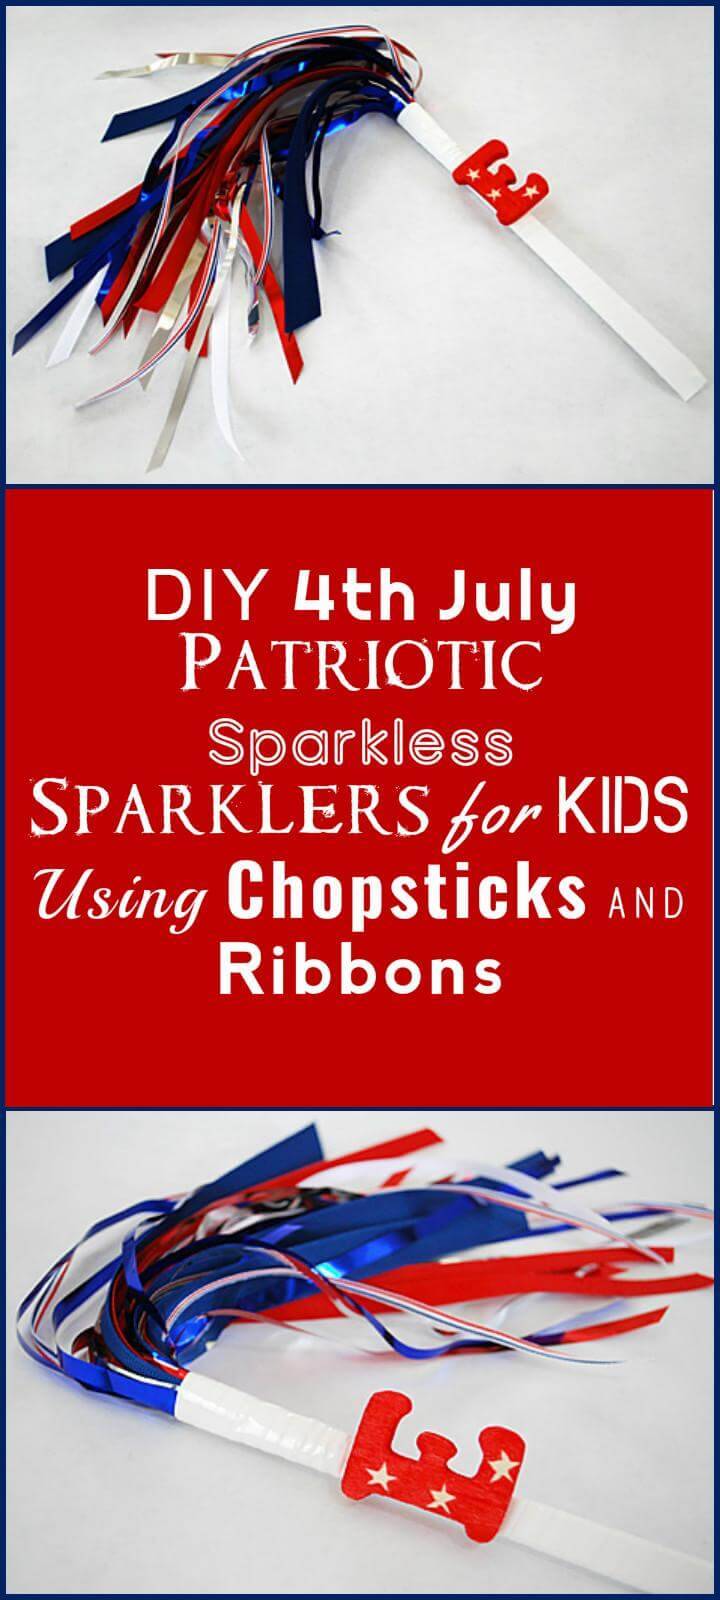 DIY 4th July Patriotic sparkless sparklers